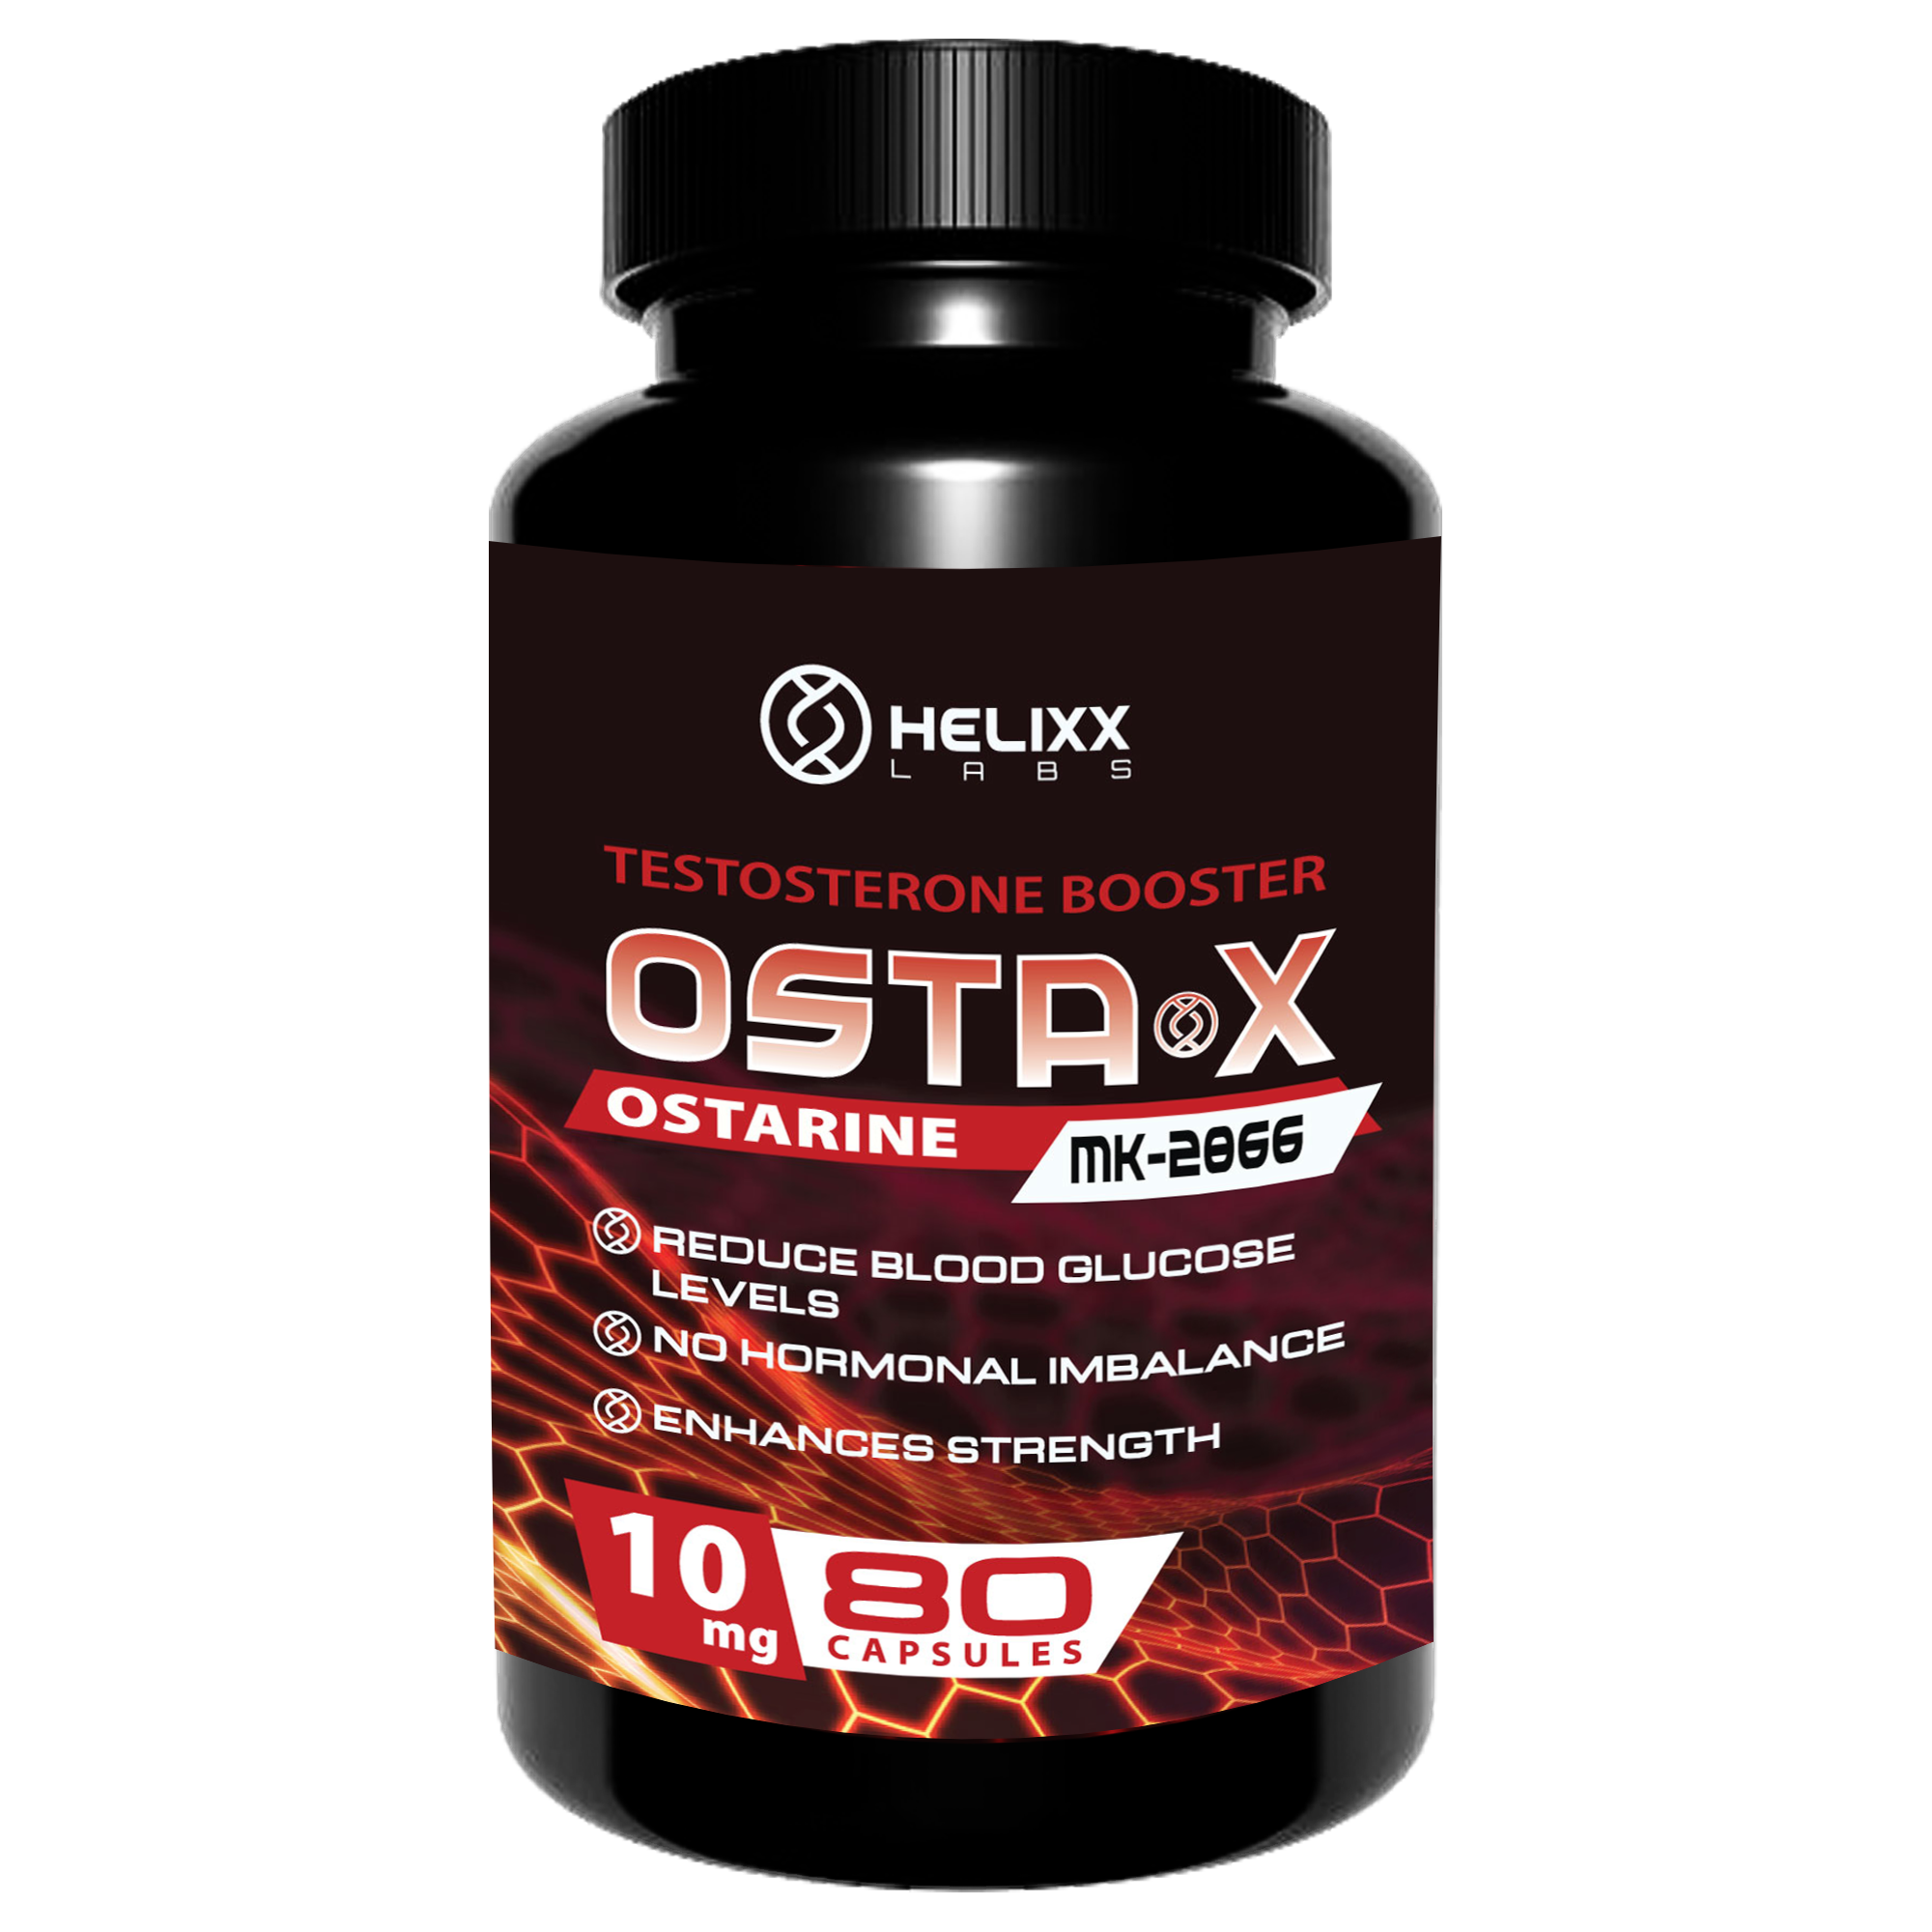 Helixx OSTA X (10mg – 80 capsules) Vitamins & Supplements Helixx helixx-osta-x-10mg-80-capsules